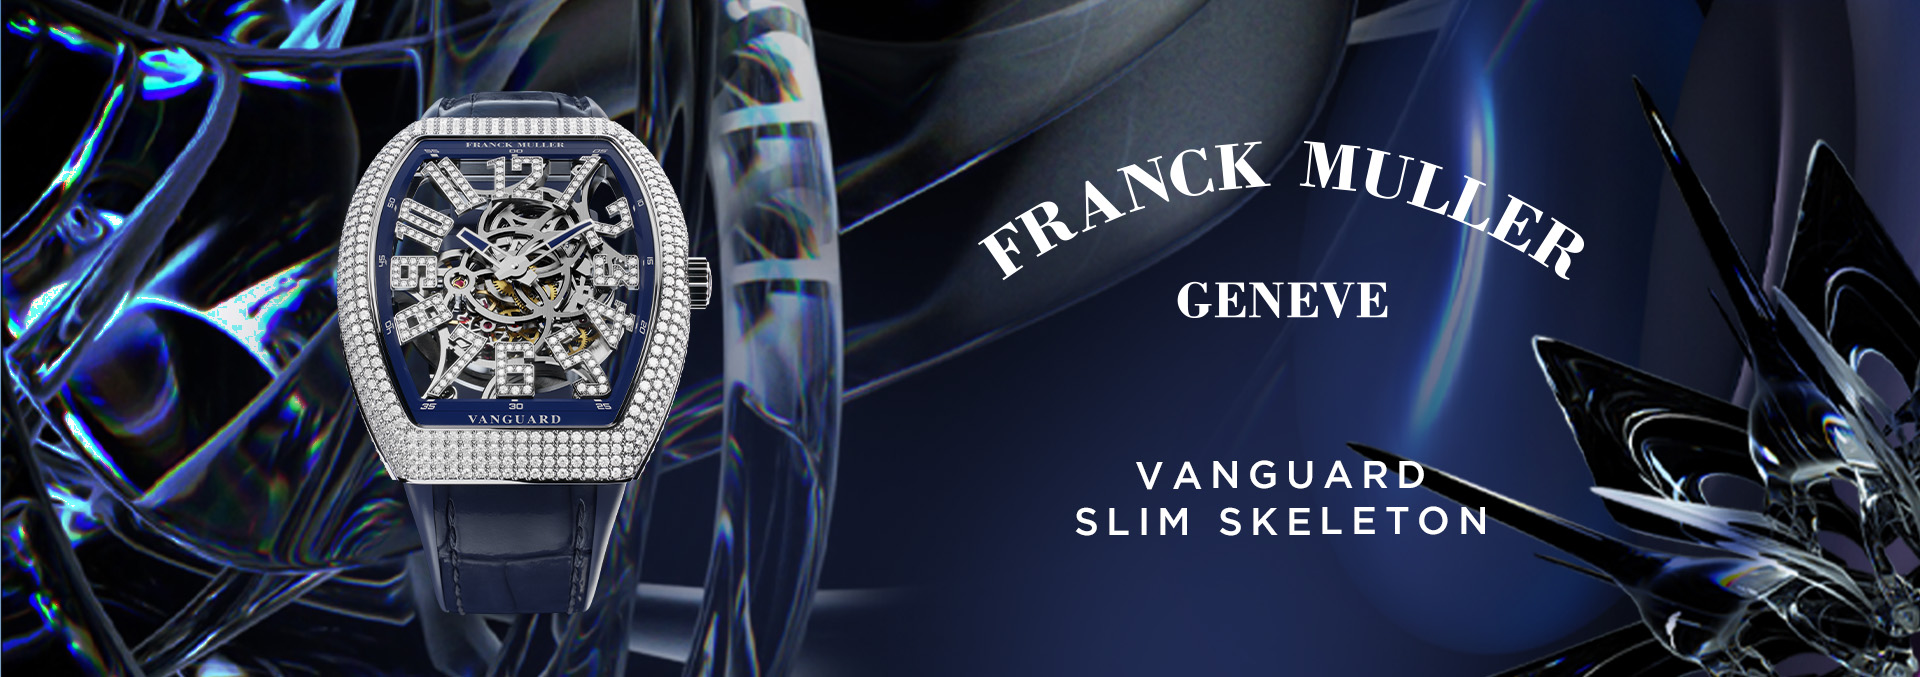 Franck Muller_Vanguard Slim Skeleton_Cortina Watch